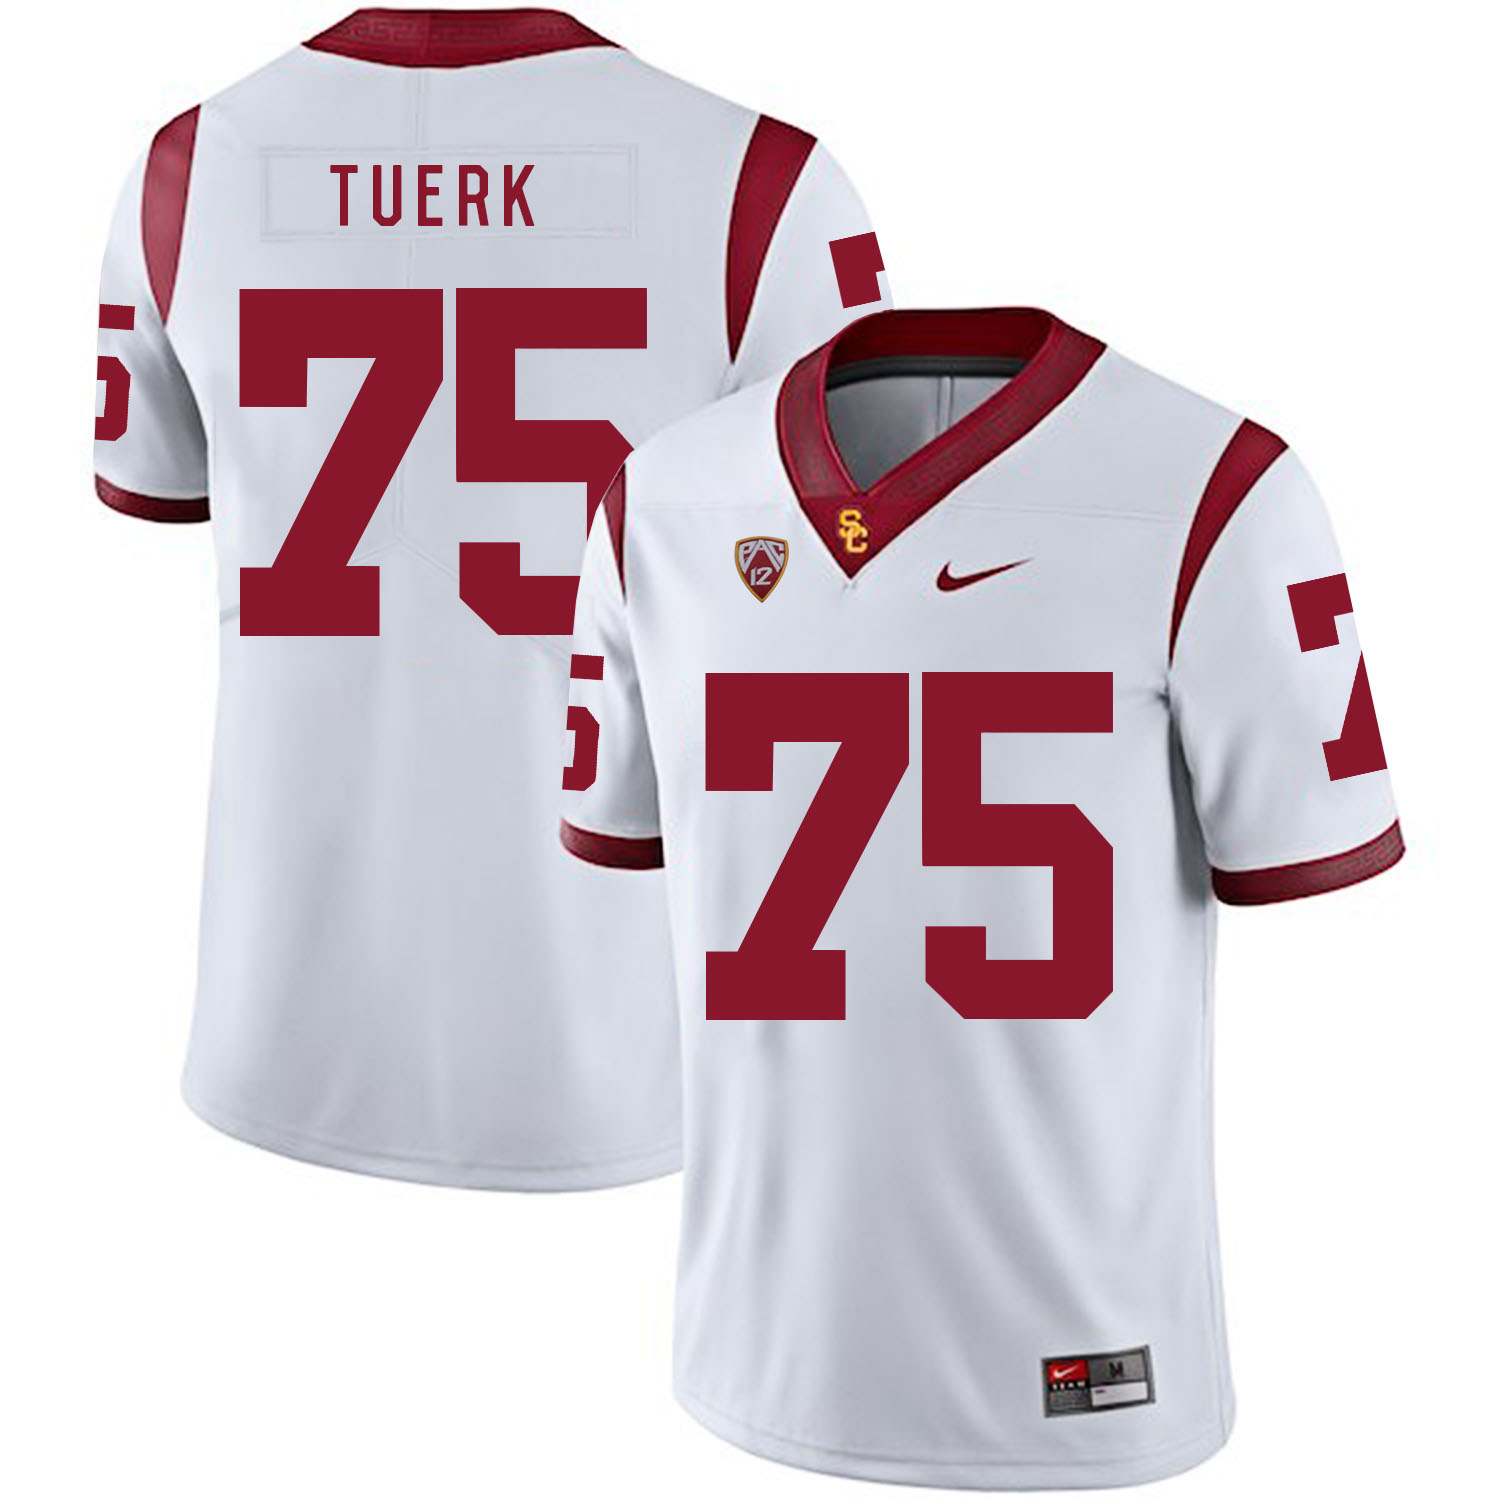 USC Trojans 75 Max Tuerk White College Football Jersey